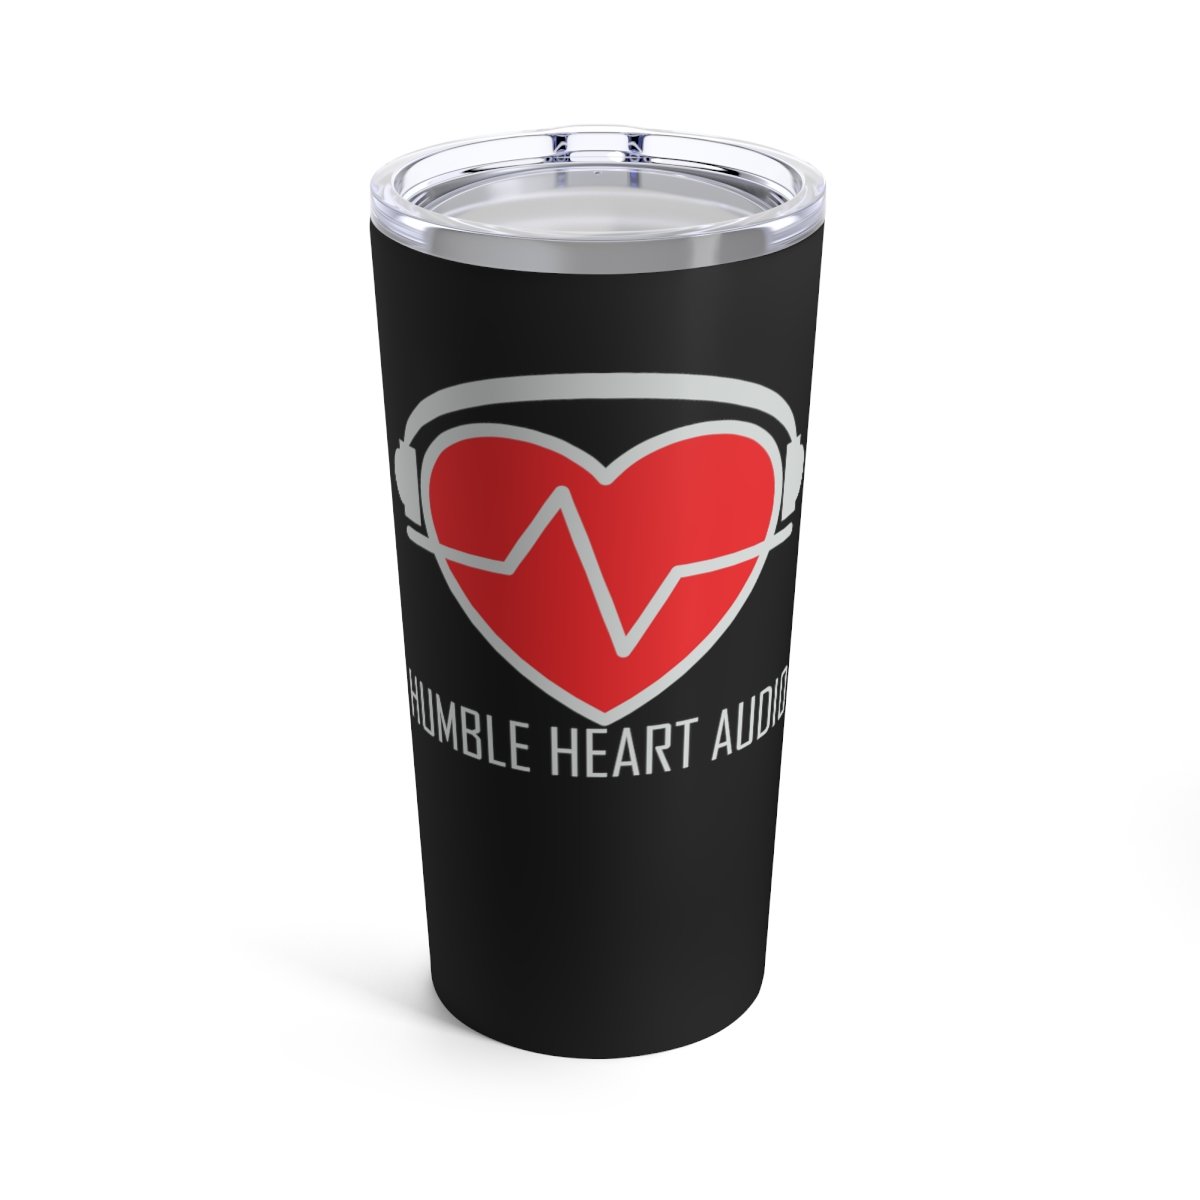 Humble Heart Audio 20oz Stainless Steel Tumbler